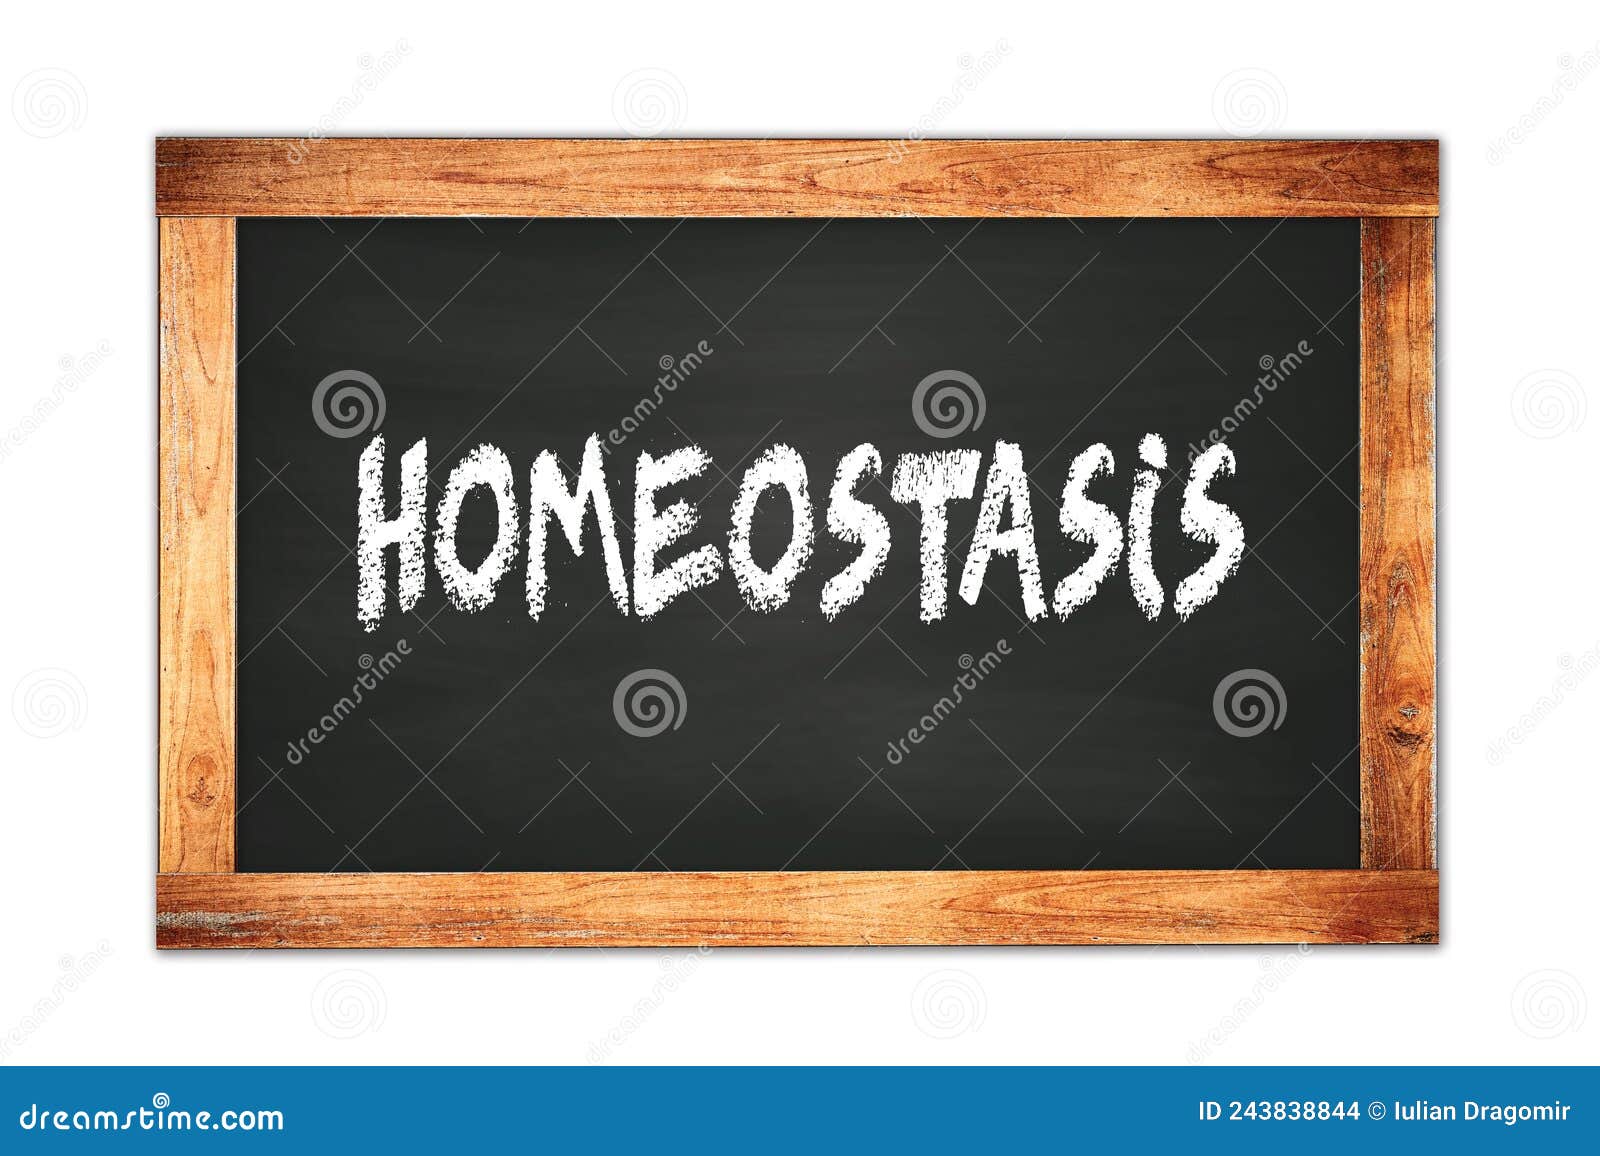 homeostasis text written on wooden frame school blackboard